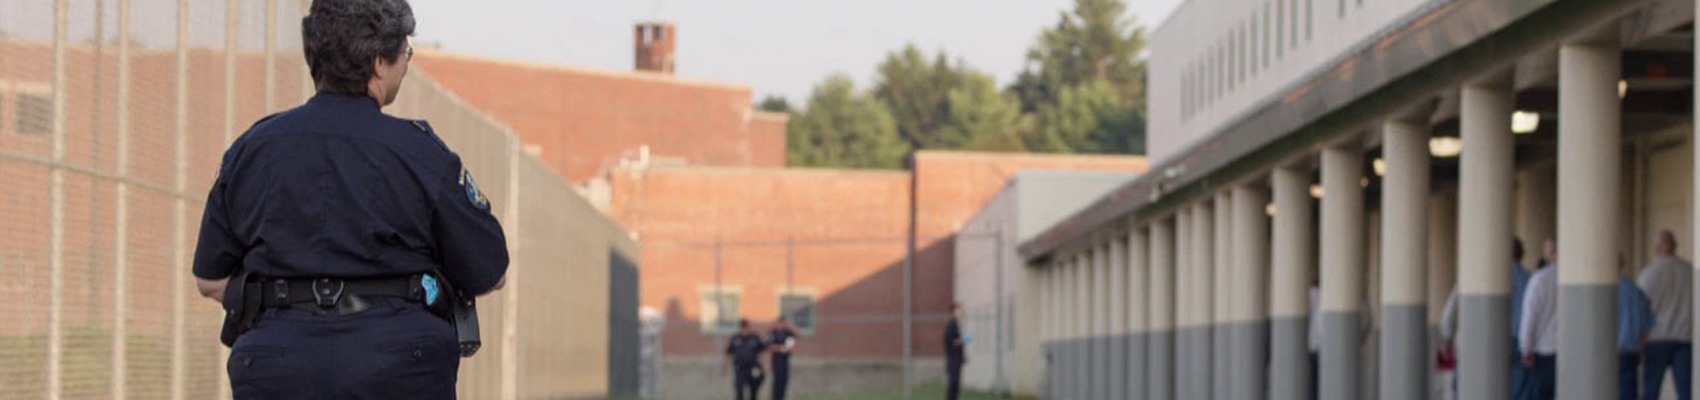 Woman guard walking in prison yard